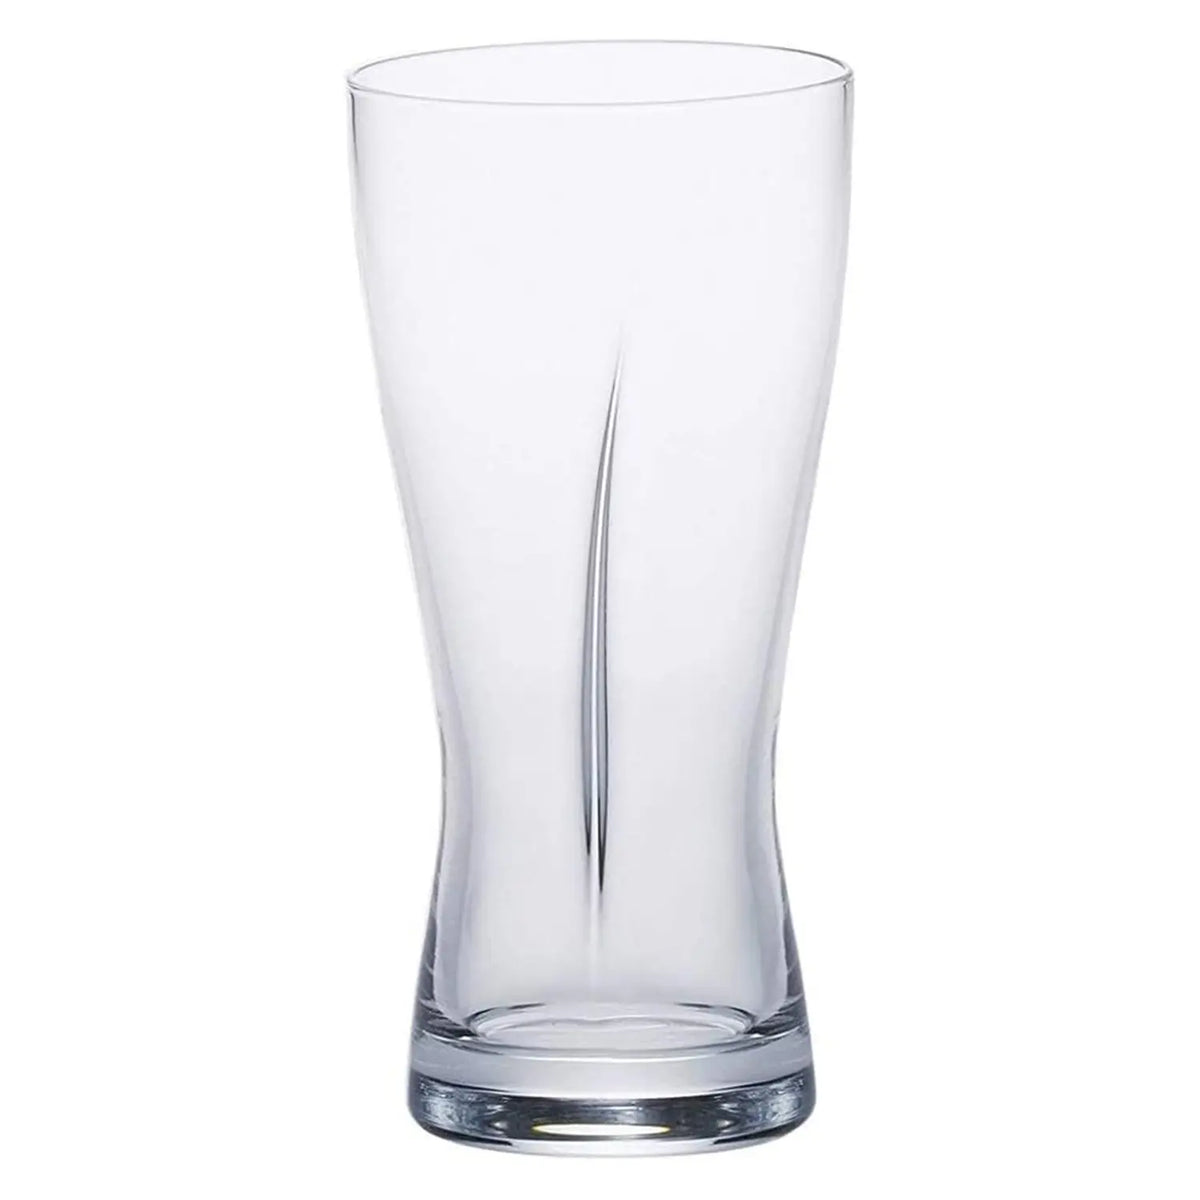 ADERIA Soda-Lime Glass Premium Pilsner Beer Glass Set of 3